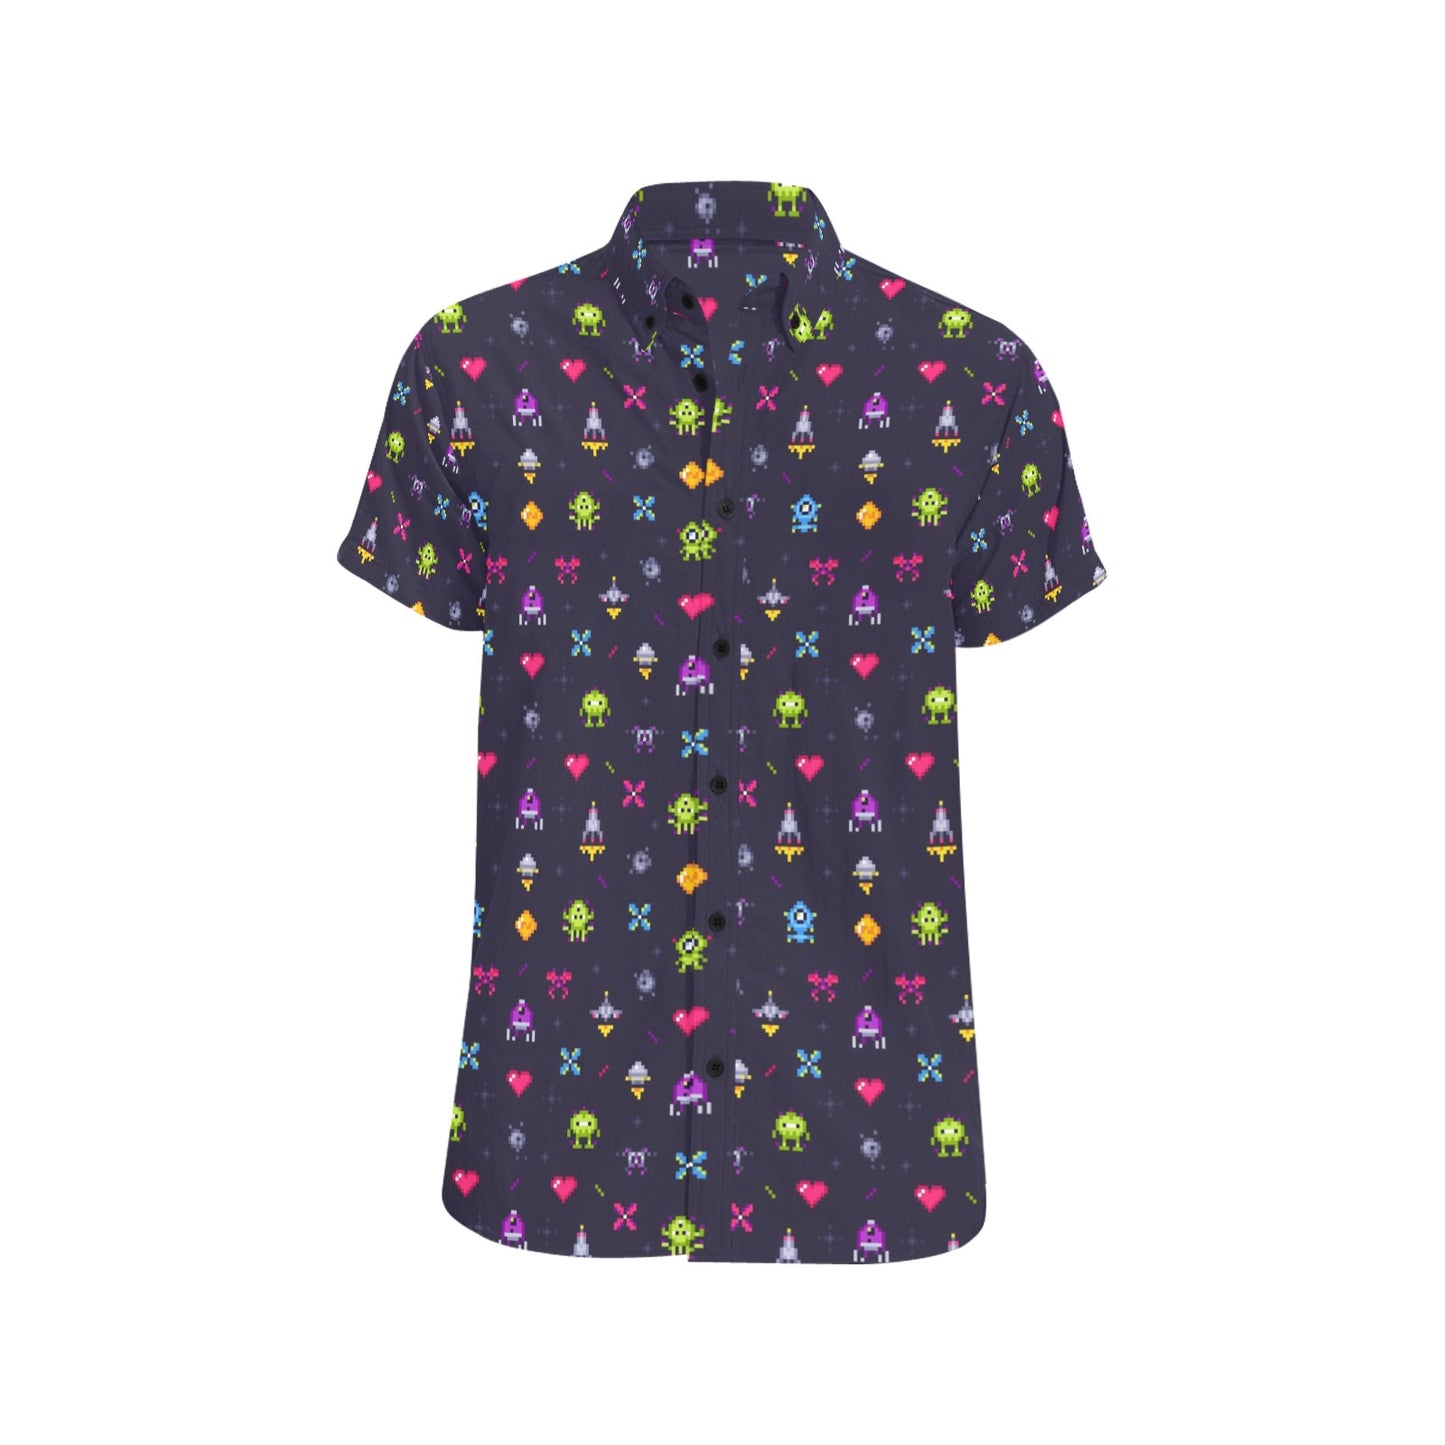 Arcade Gaming Short Sleeve Men Button Down Shirt, Video Game 80s Pixel Art Print Casual Buttoned Down Summer Dress Collared Shirt Starcove Fashion